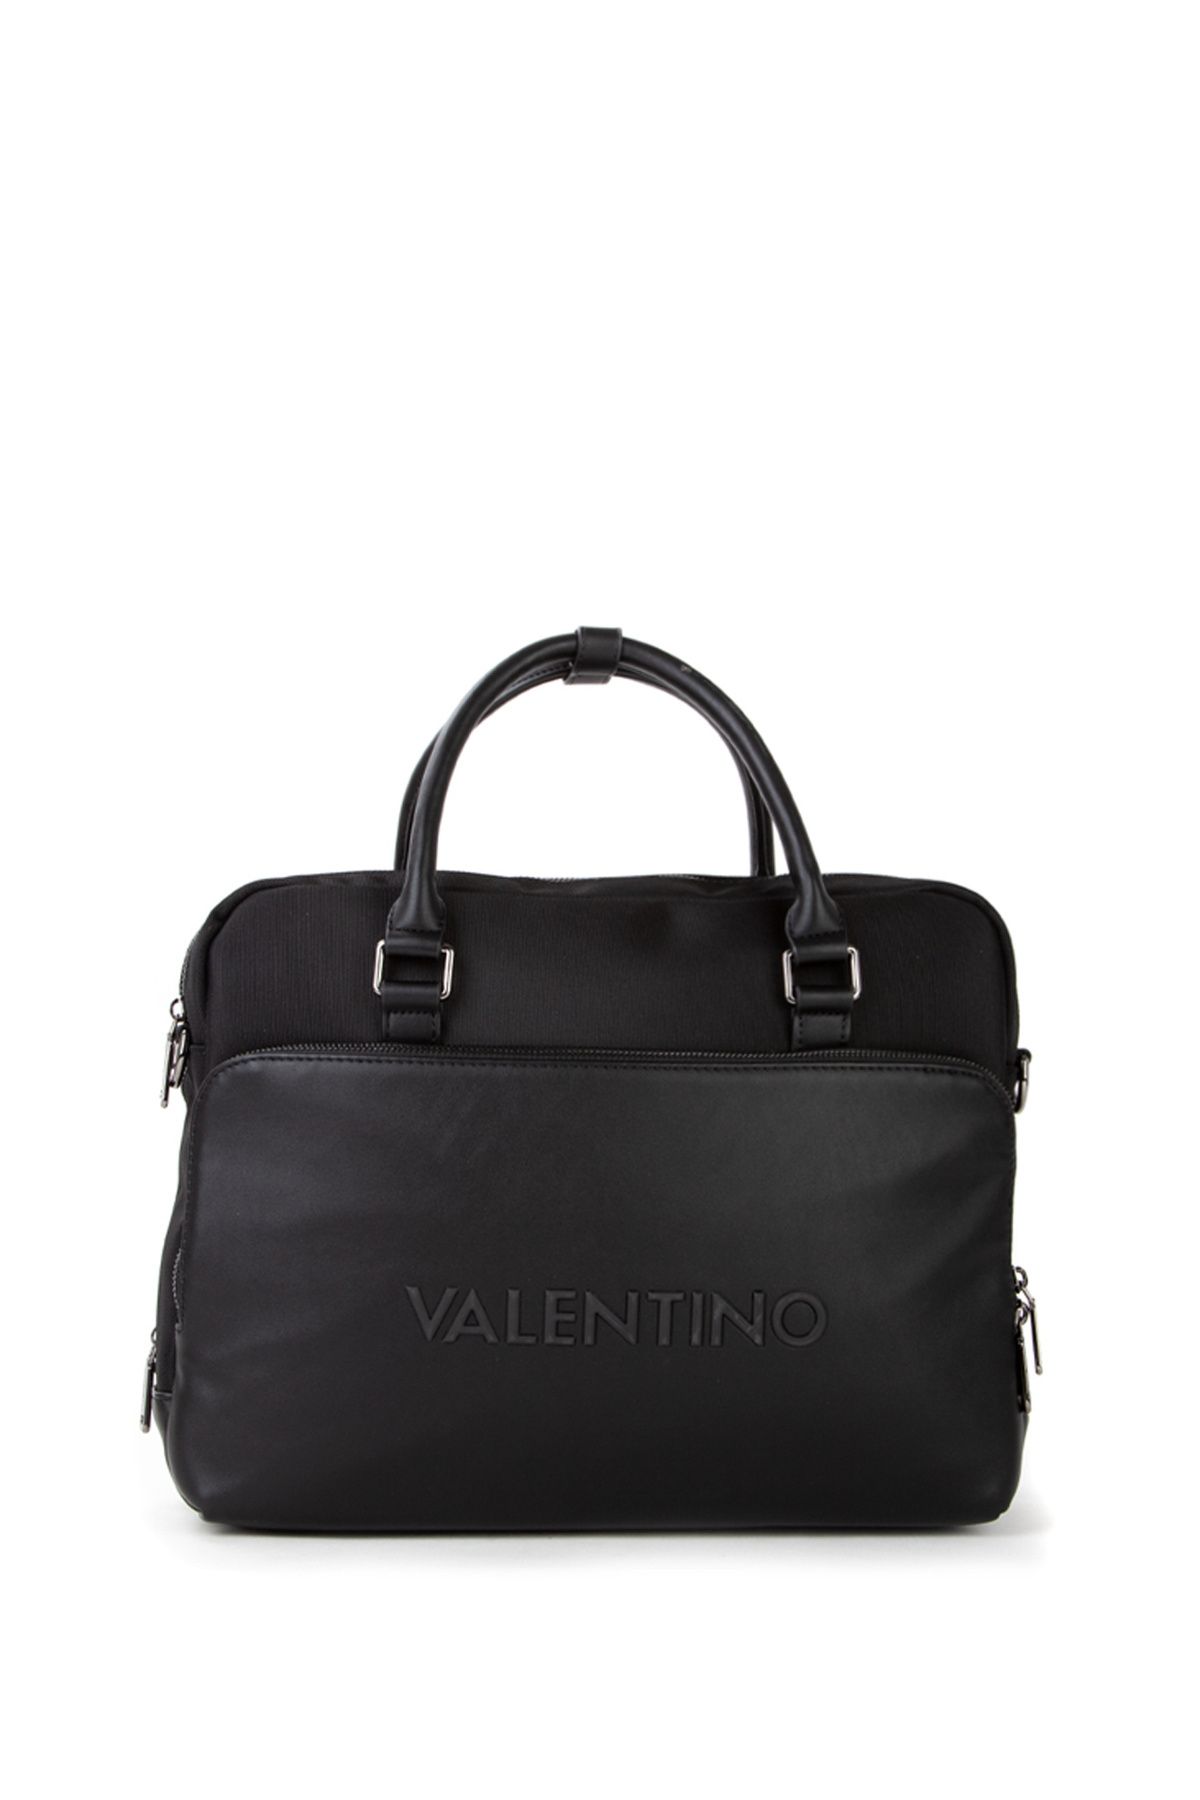 Valentino Siyah Erkek 38x31x11 cm Laptop Çantası VBS7C316